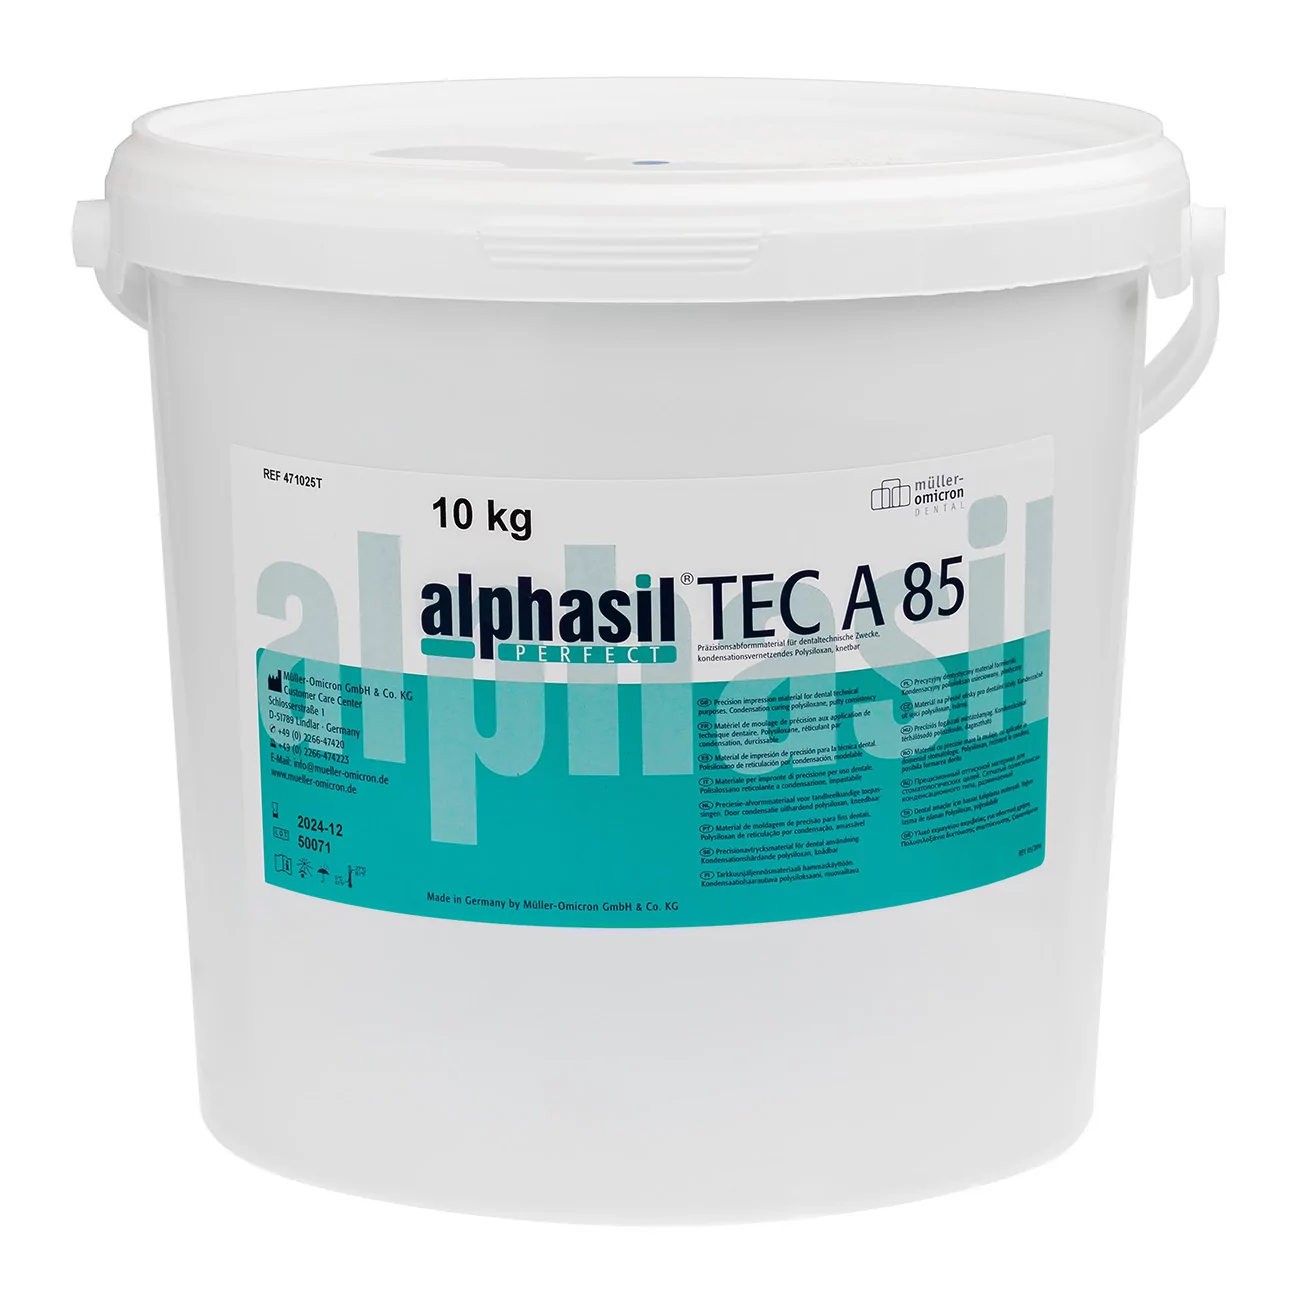 Дублировочный C-силикон Alphasil PERFECT TEC A85, 10 кг, 000471025T